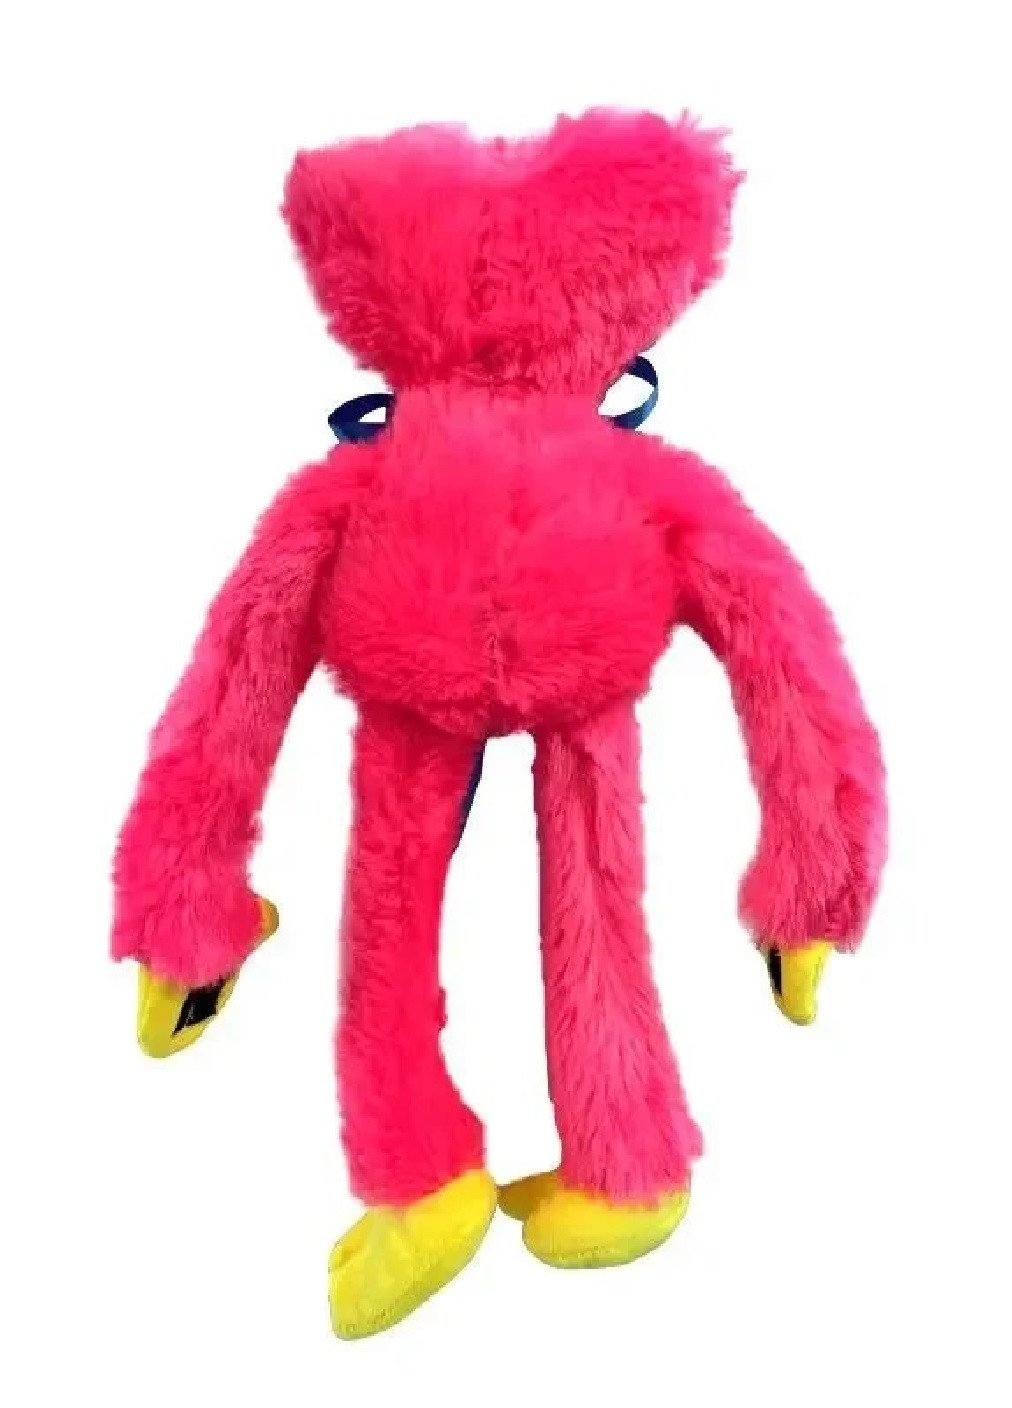 Мягкая игрушка обнимашка Киси Миси подружка Хаги Ваги монстр из плюша 100 см с липучками на лапках Huggу-Wuggу (473478-Prob) Unbranded (254883991)